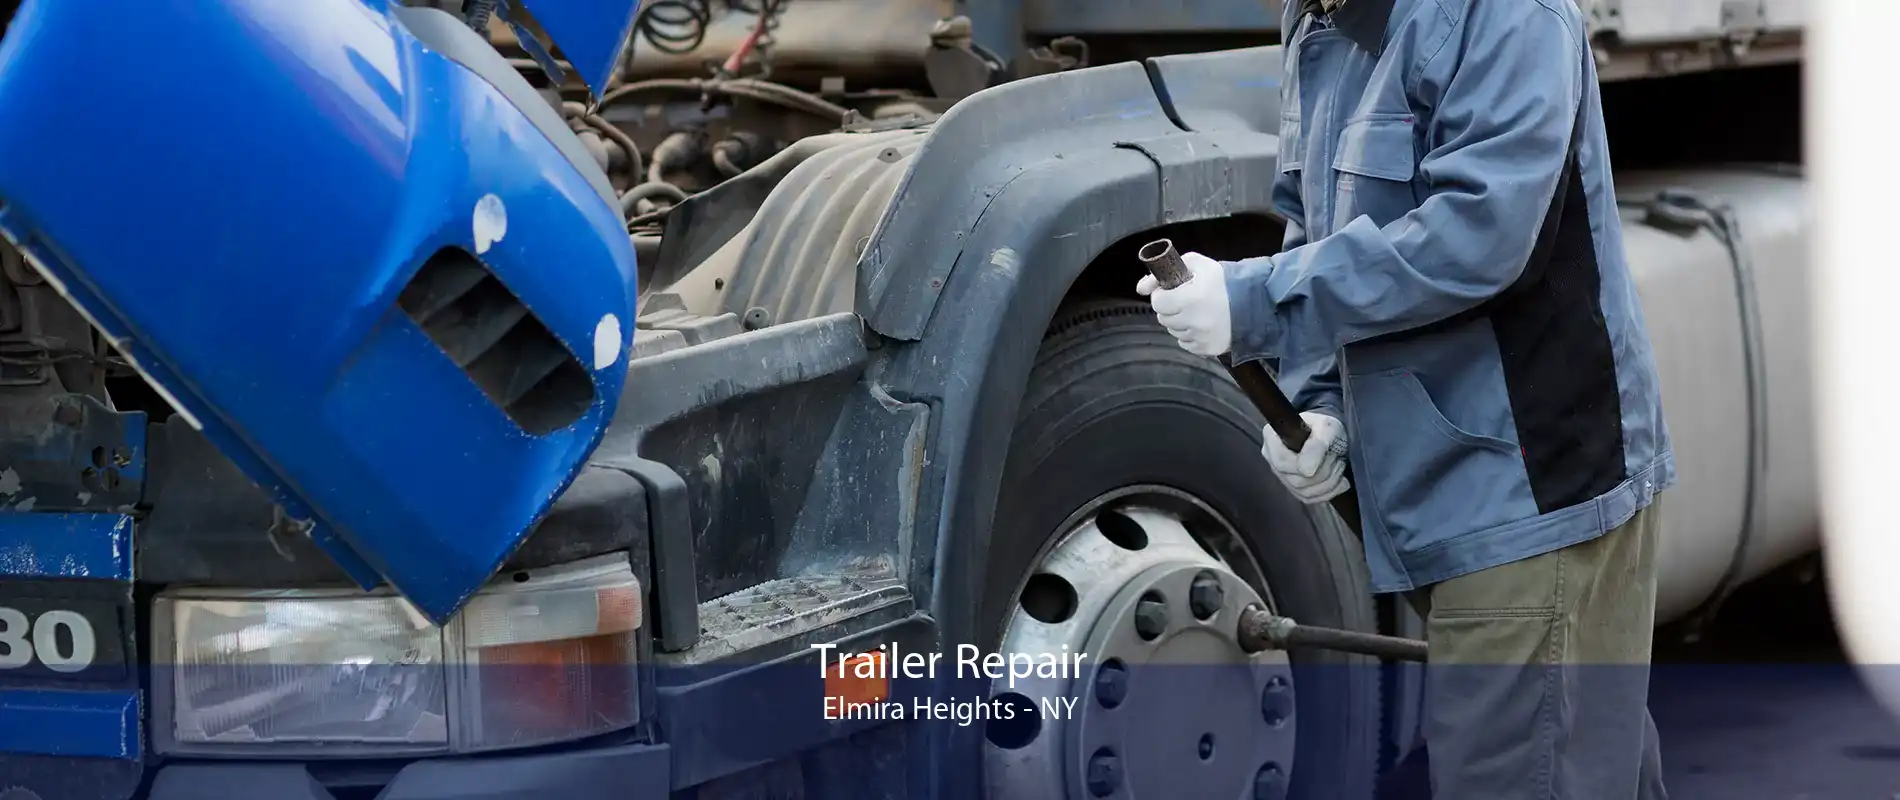 Trailer Repair Elmira Heights - NY